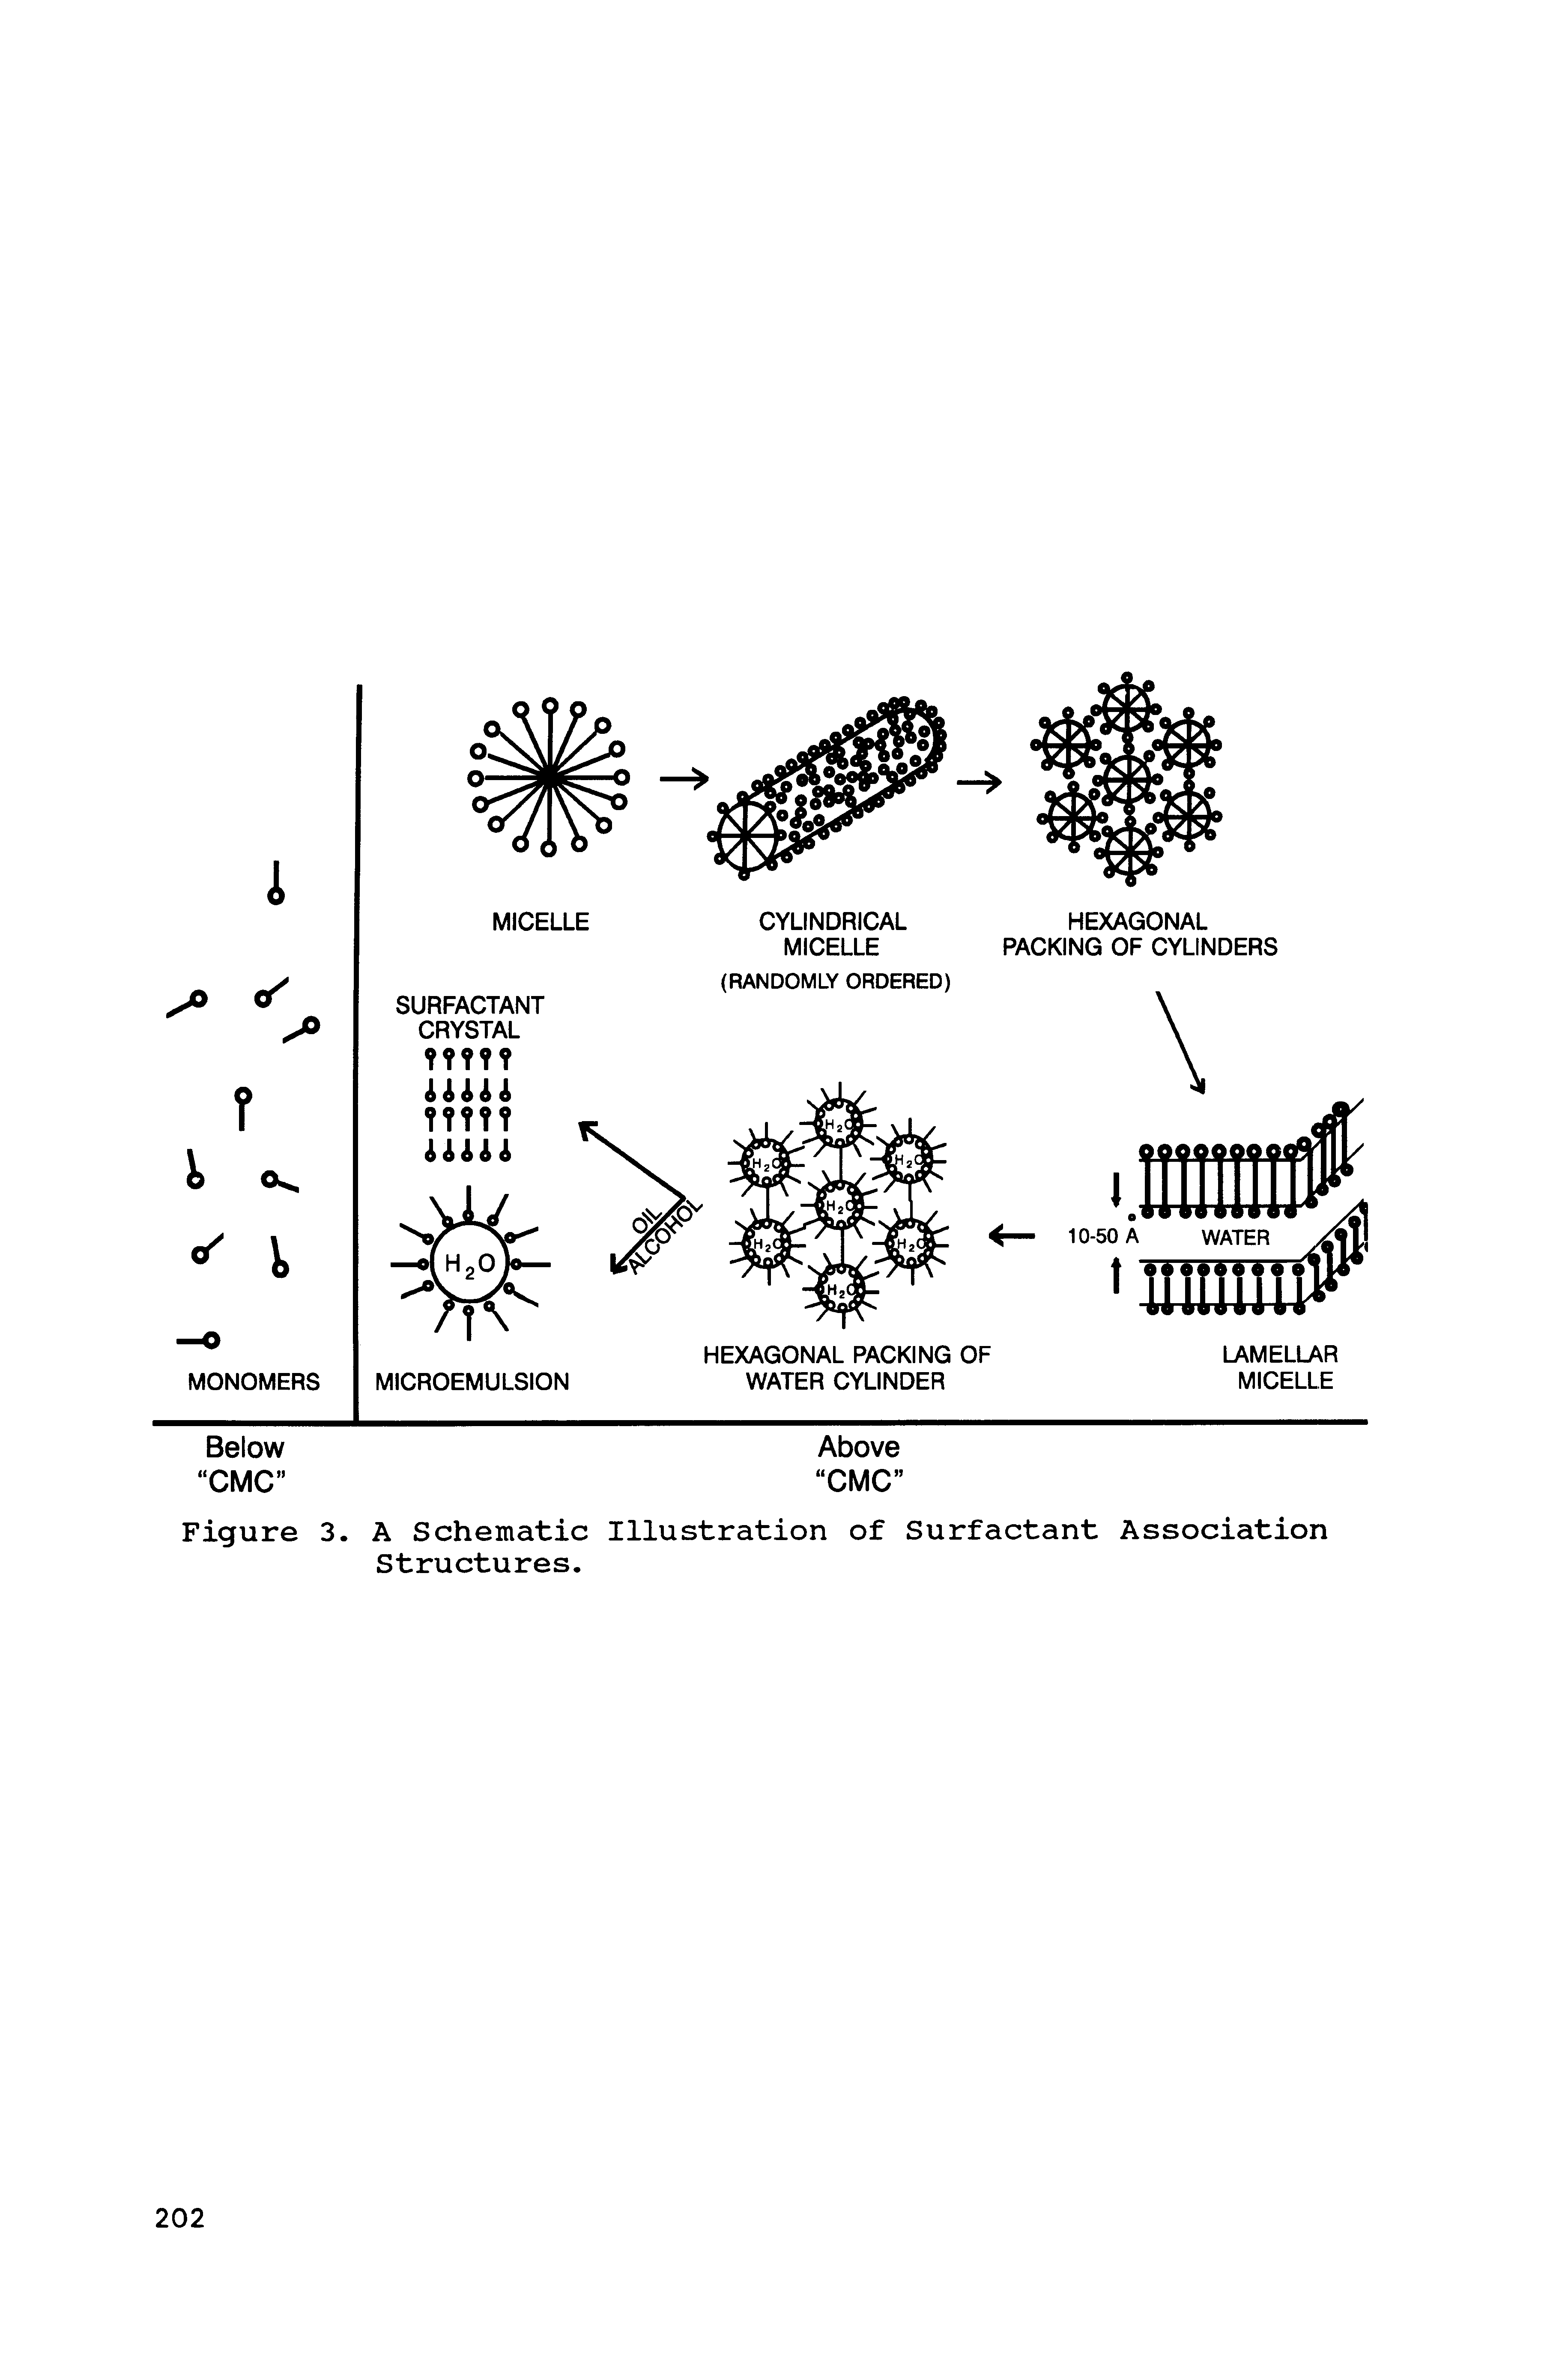 Figure 3. A Schematic Illustration of Surfactant Association Structures.